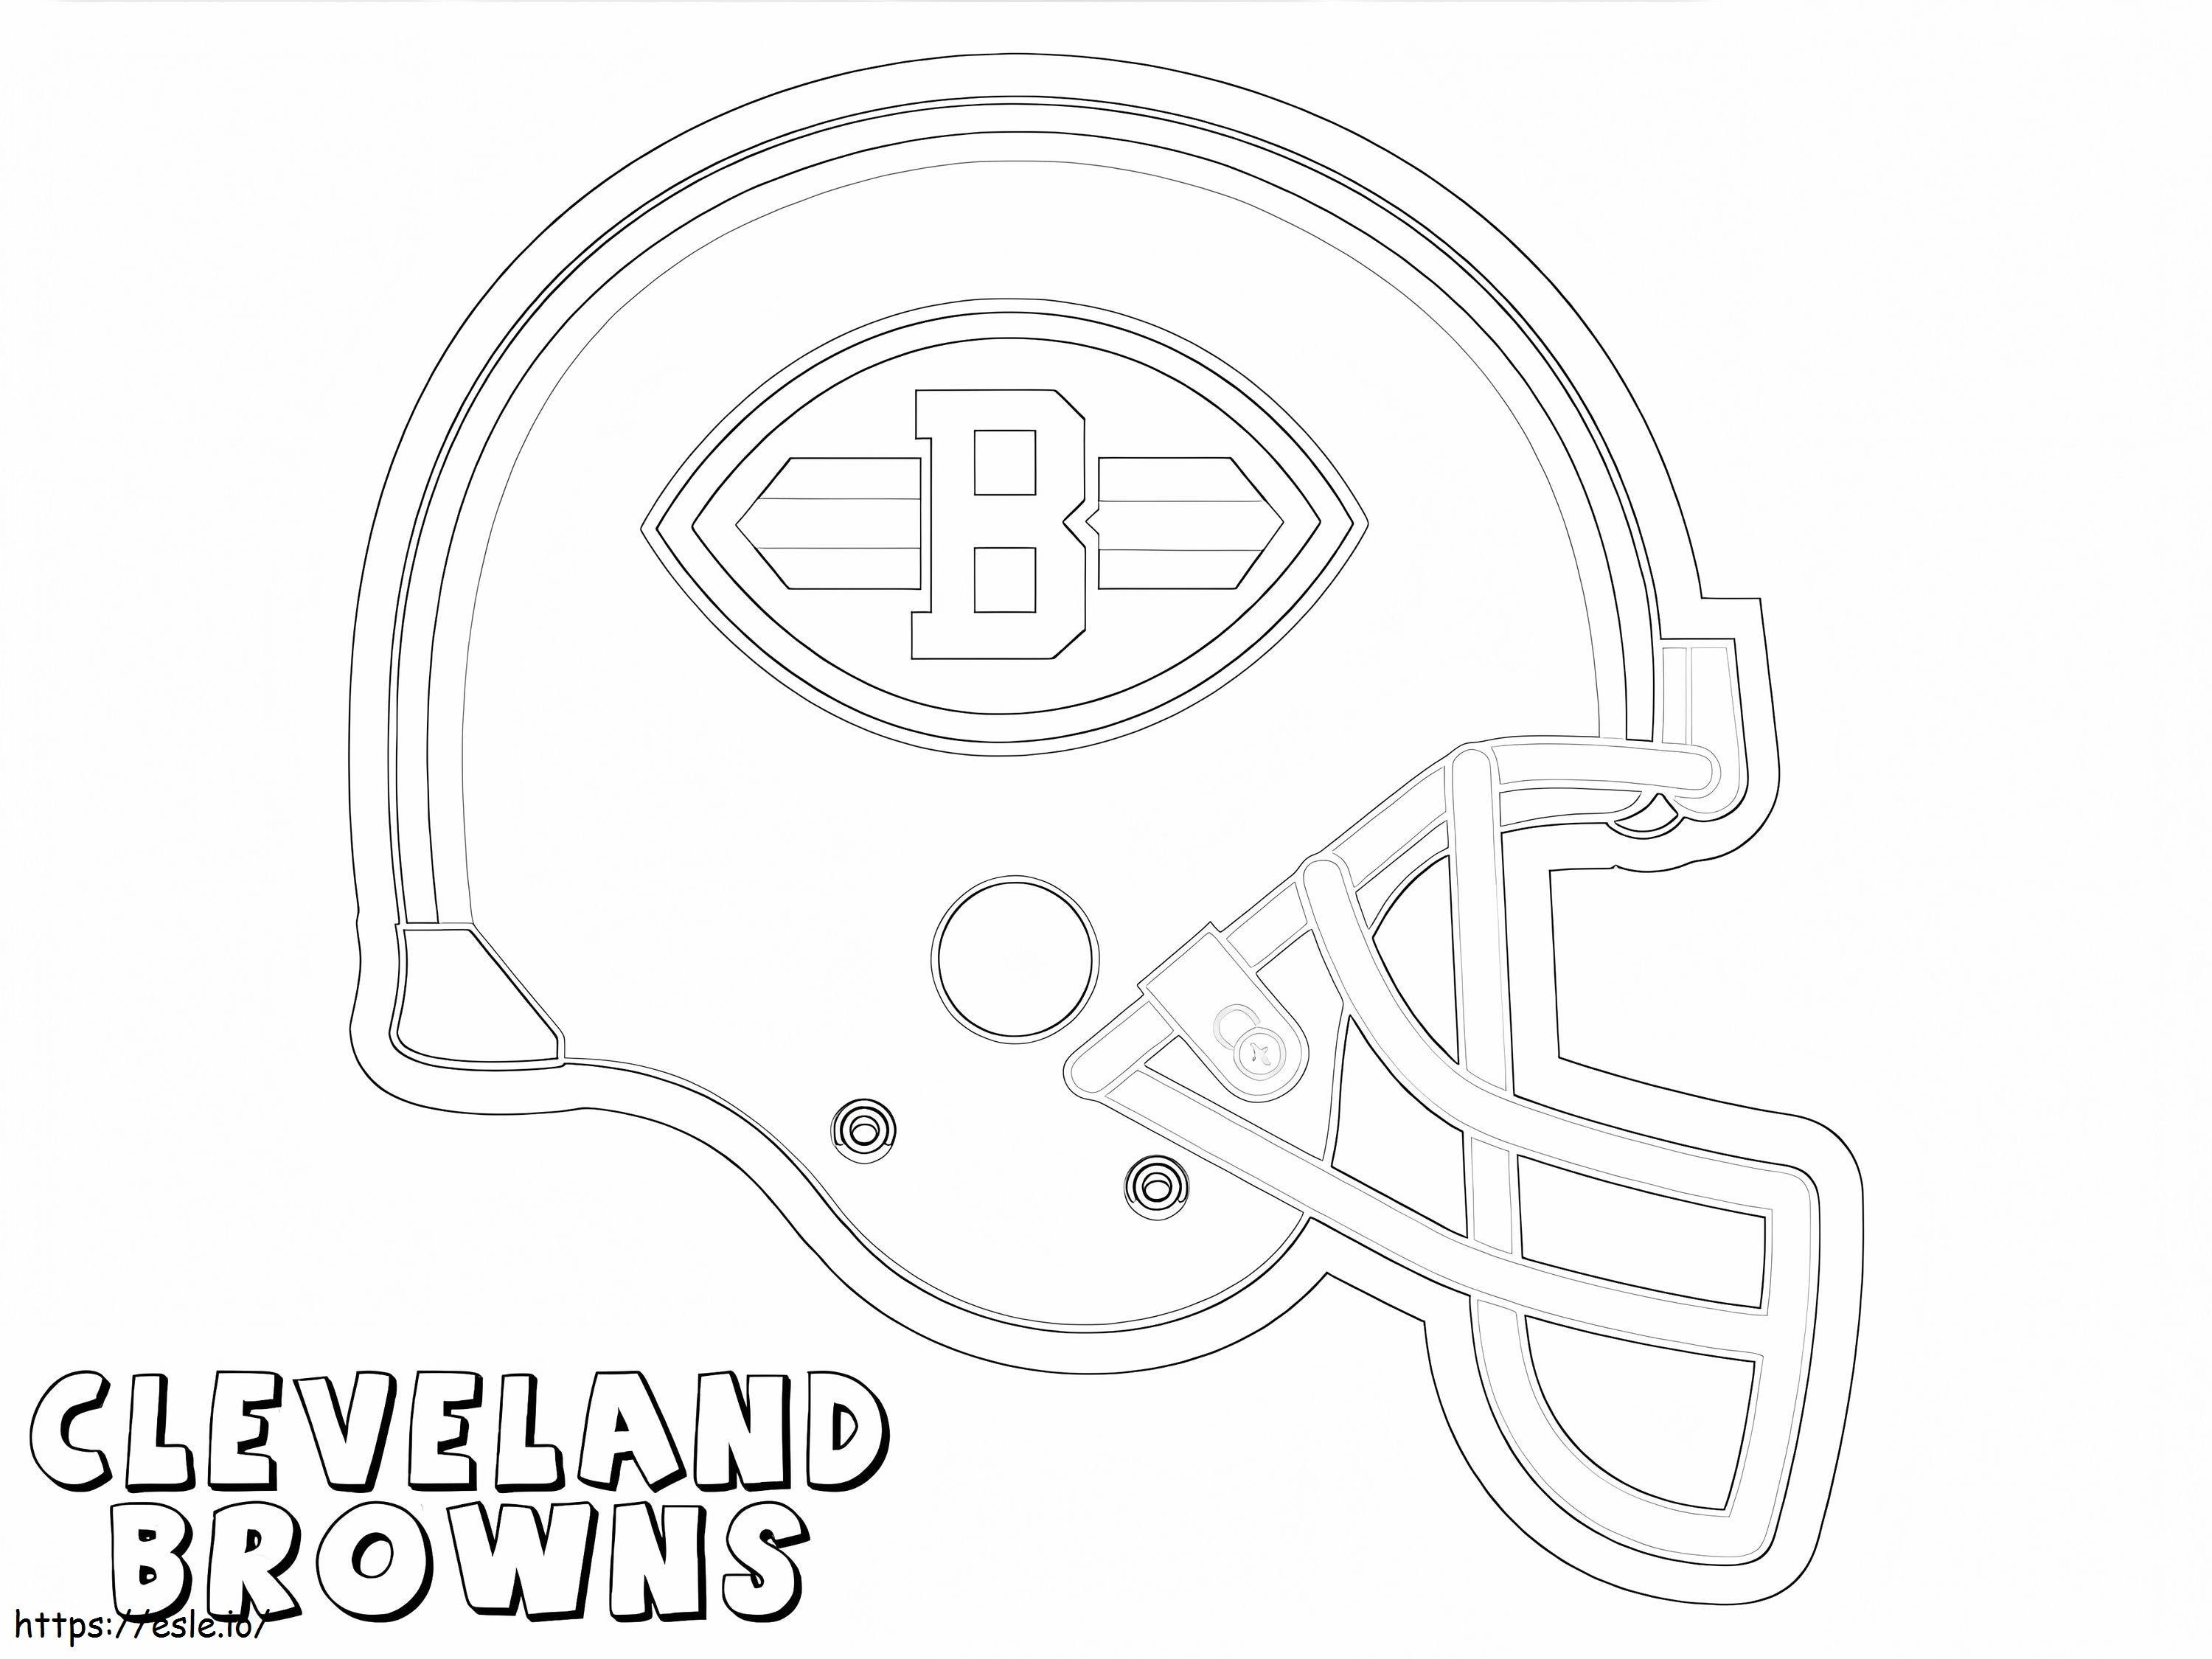 Cleveland Browns 3 kolorowanka